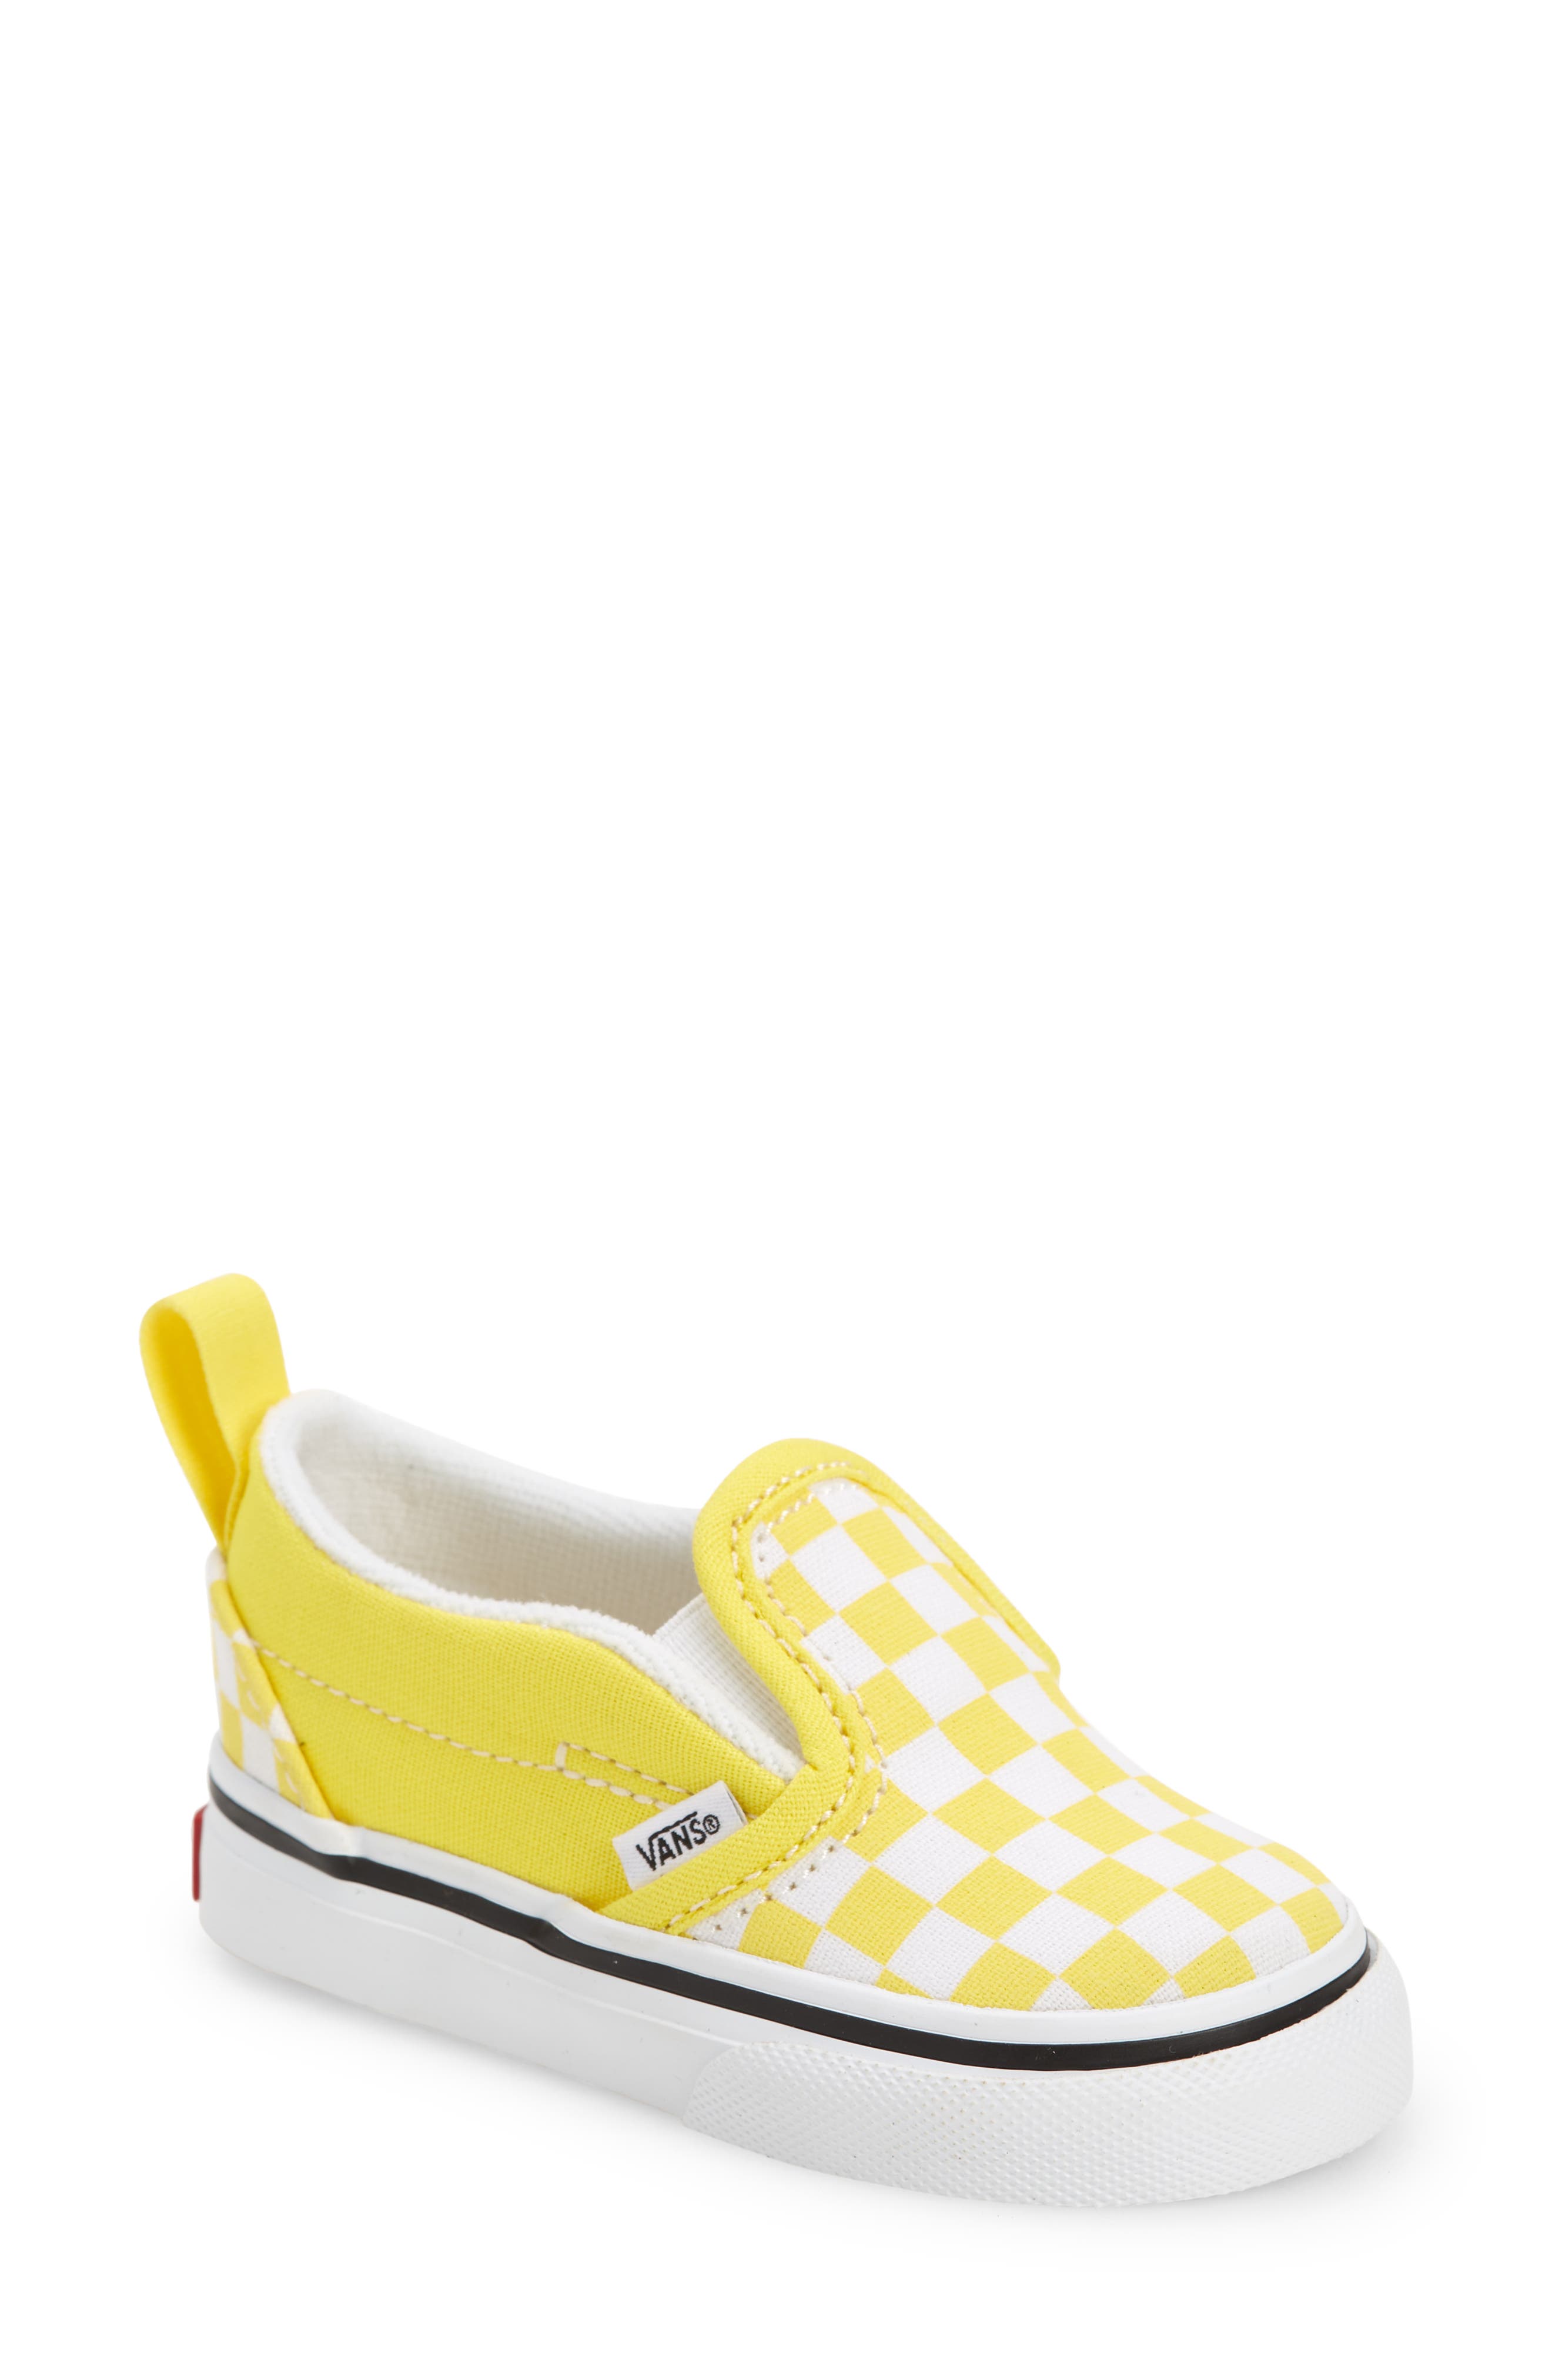 Vans Slip-On Shoe in Checkerboard Yellow/True Whit